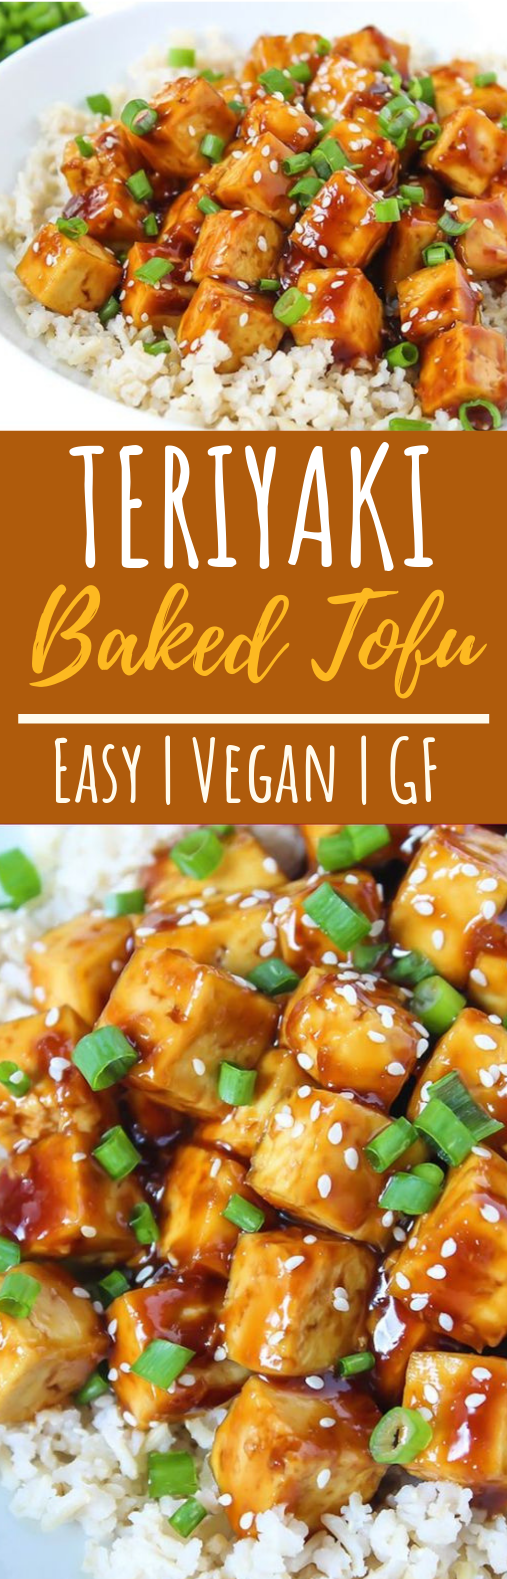 Teriyaki Baked Tofu #sidedish #vegan